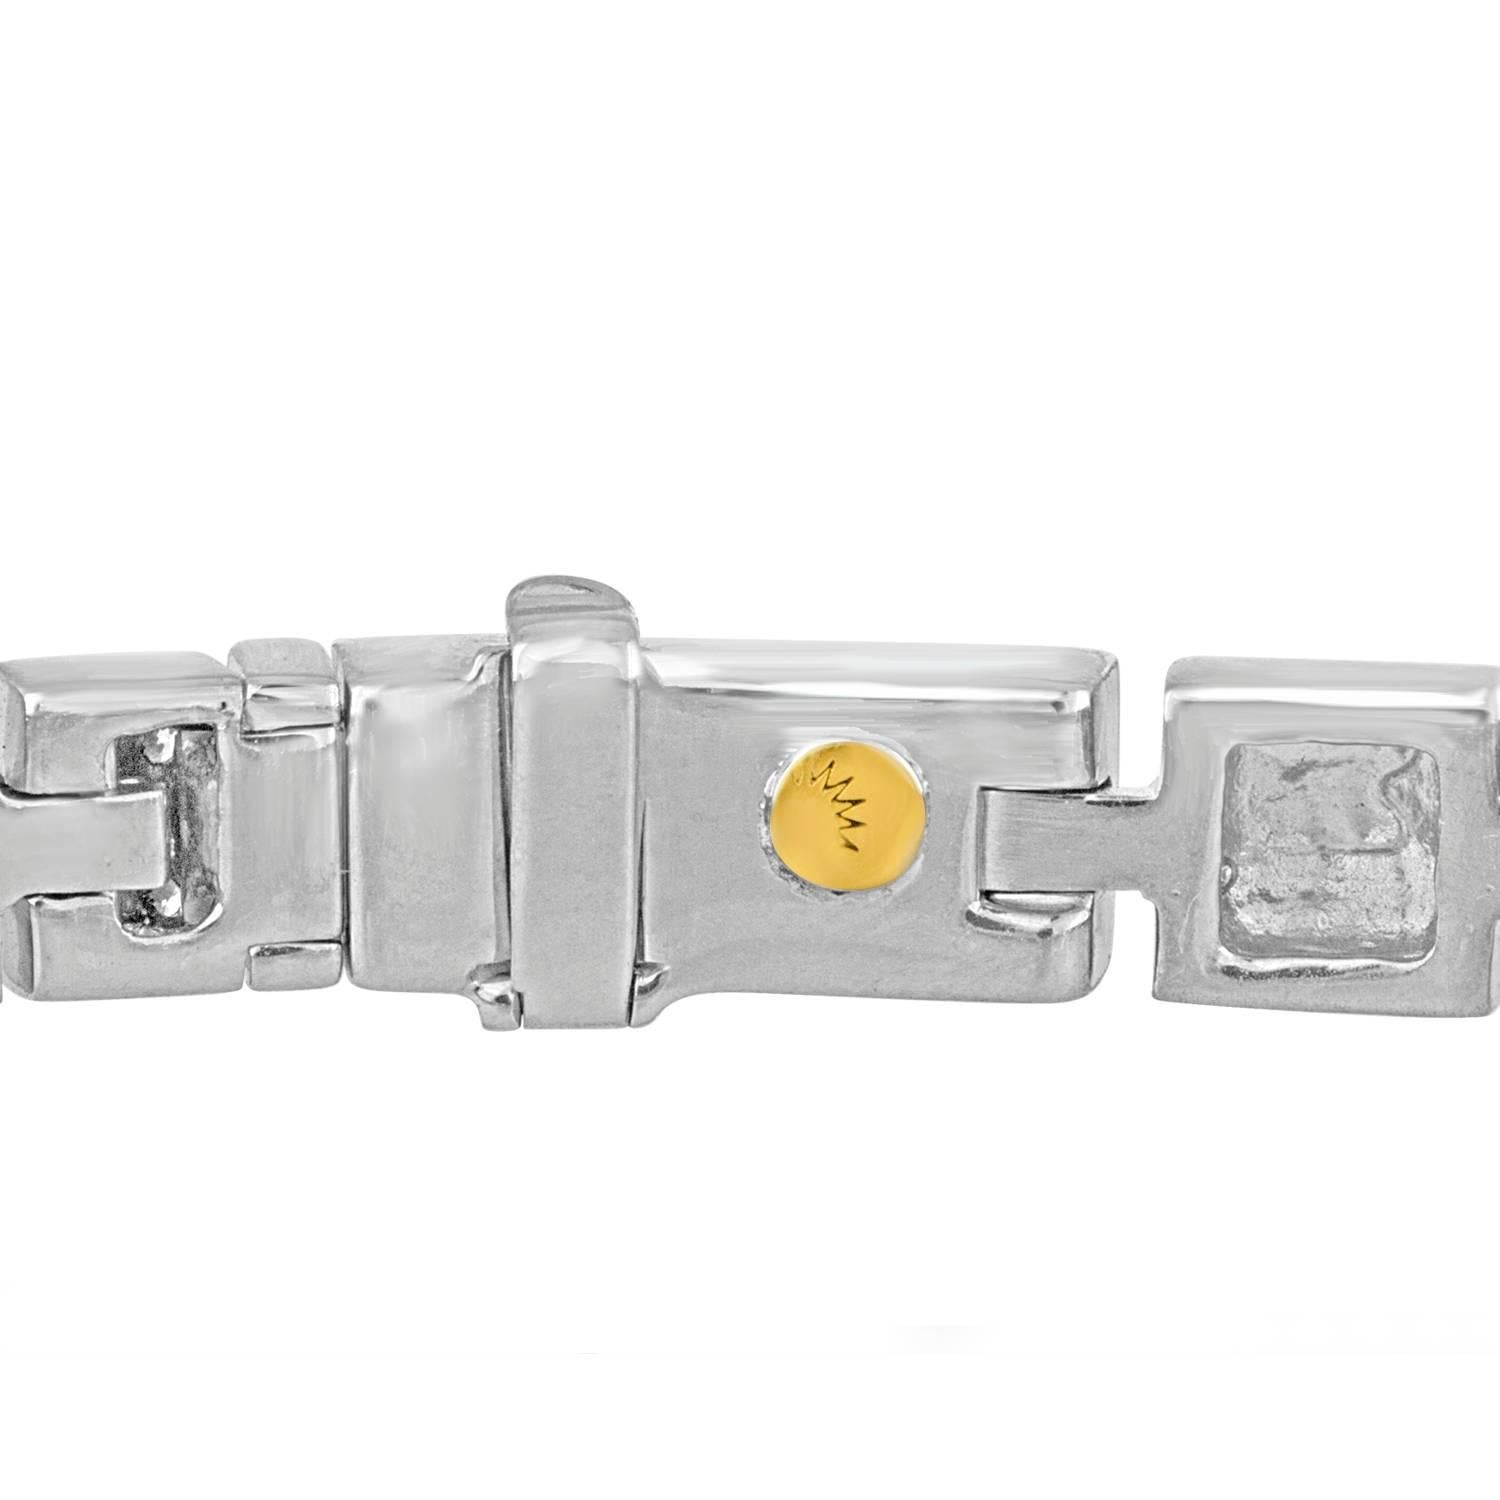 Designer Luca Carati Tennis Bracelet.
The bracelet is 18K Satin Finish & High Polish Finish White Gold.
There are 3.75 Carats In Diamonds F VVS.
The bracelet is 7